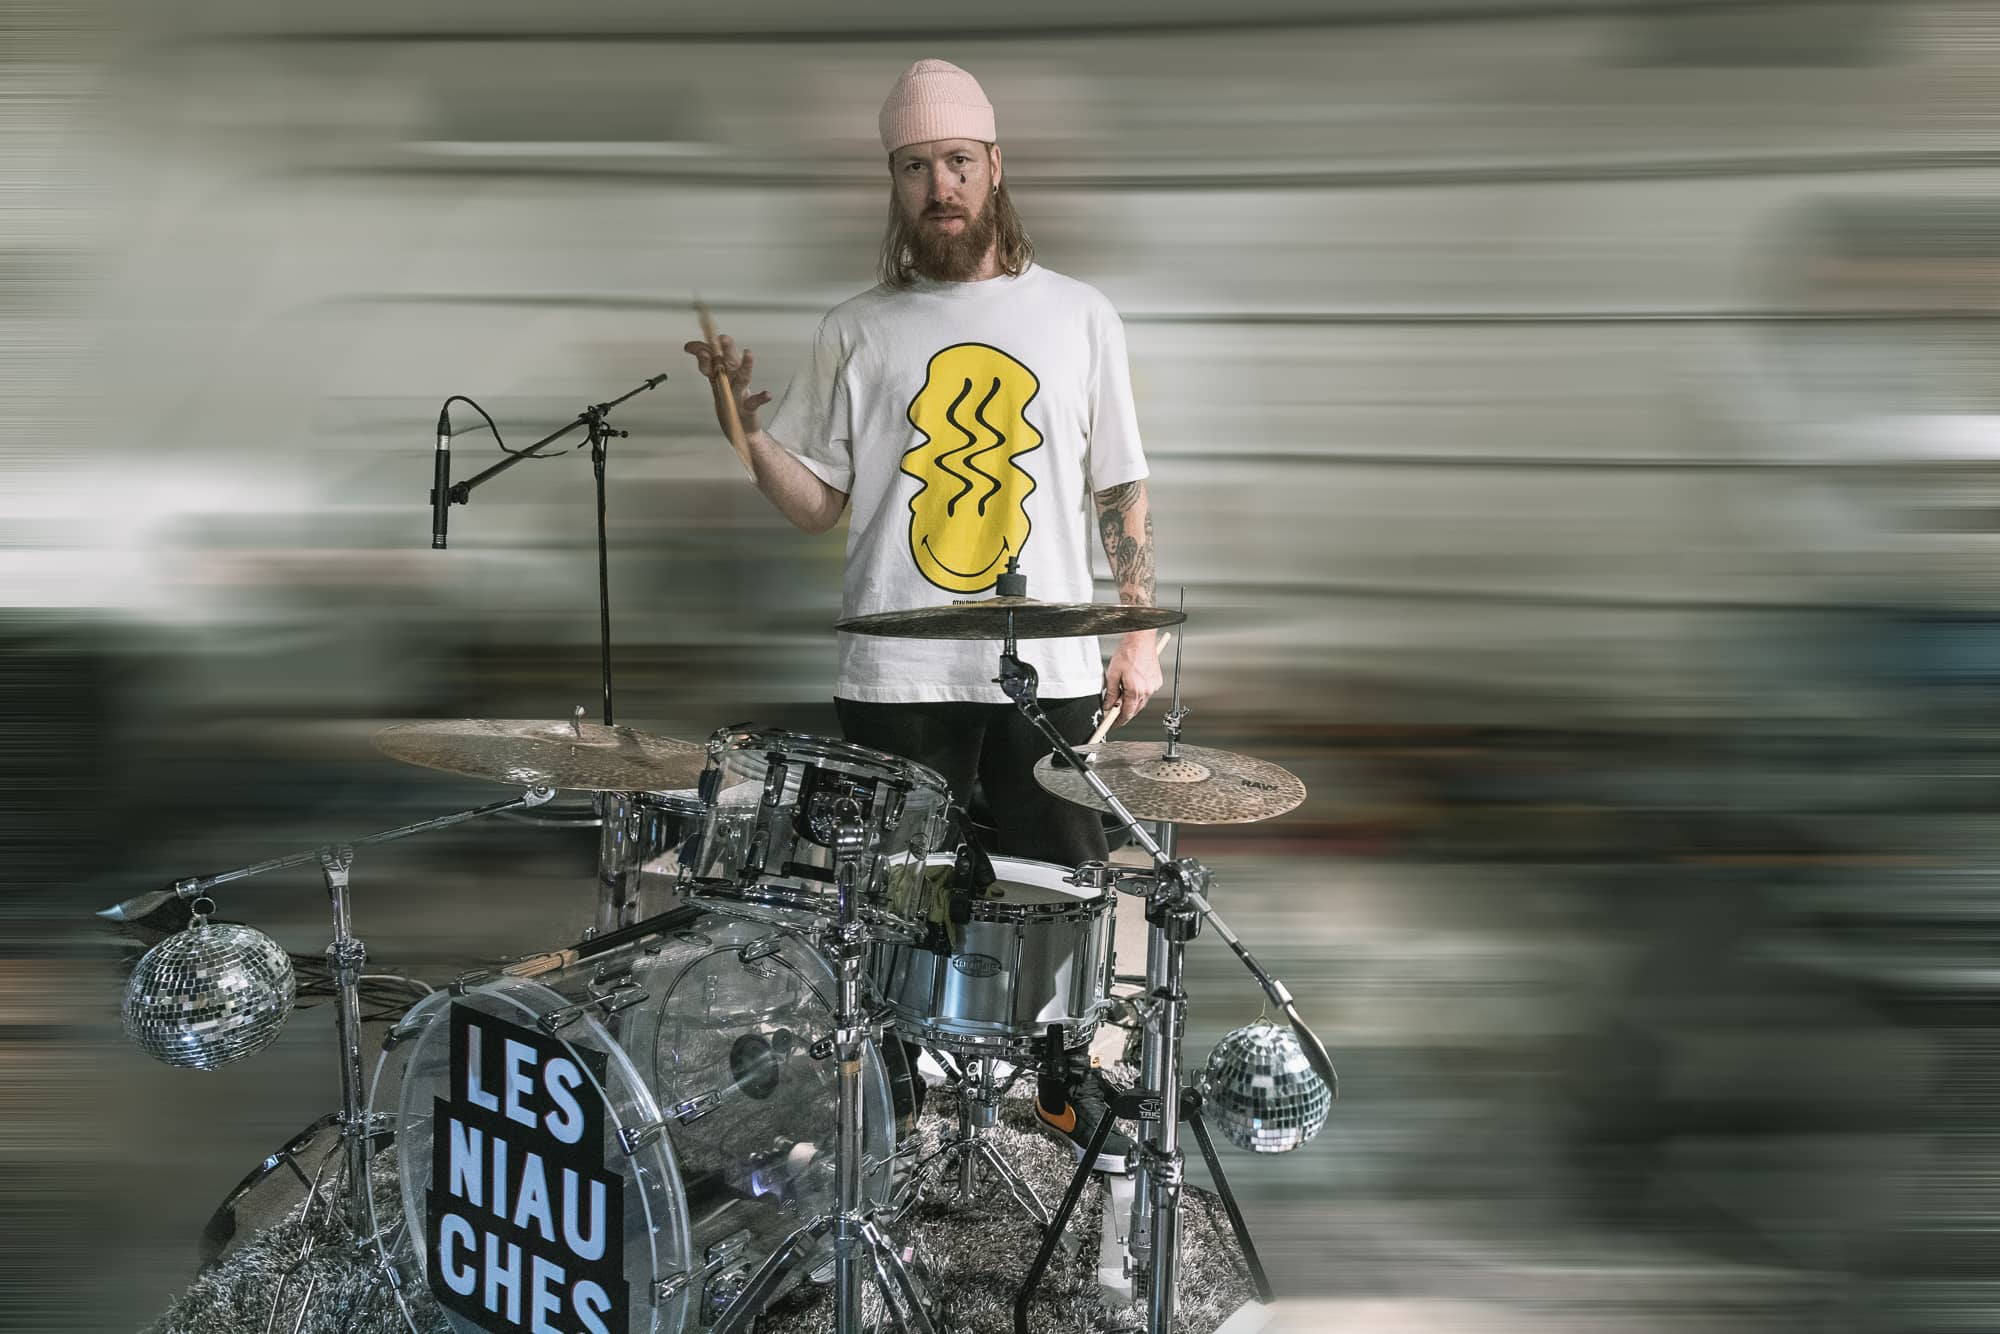 Drummer Les Niauches live at Festival LES JEAN 2022 Fribourg